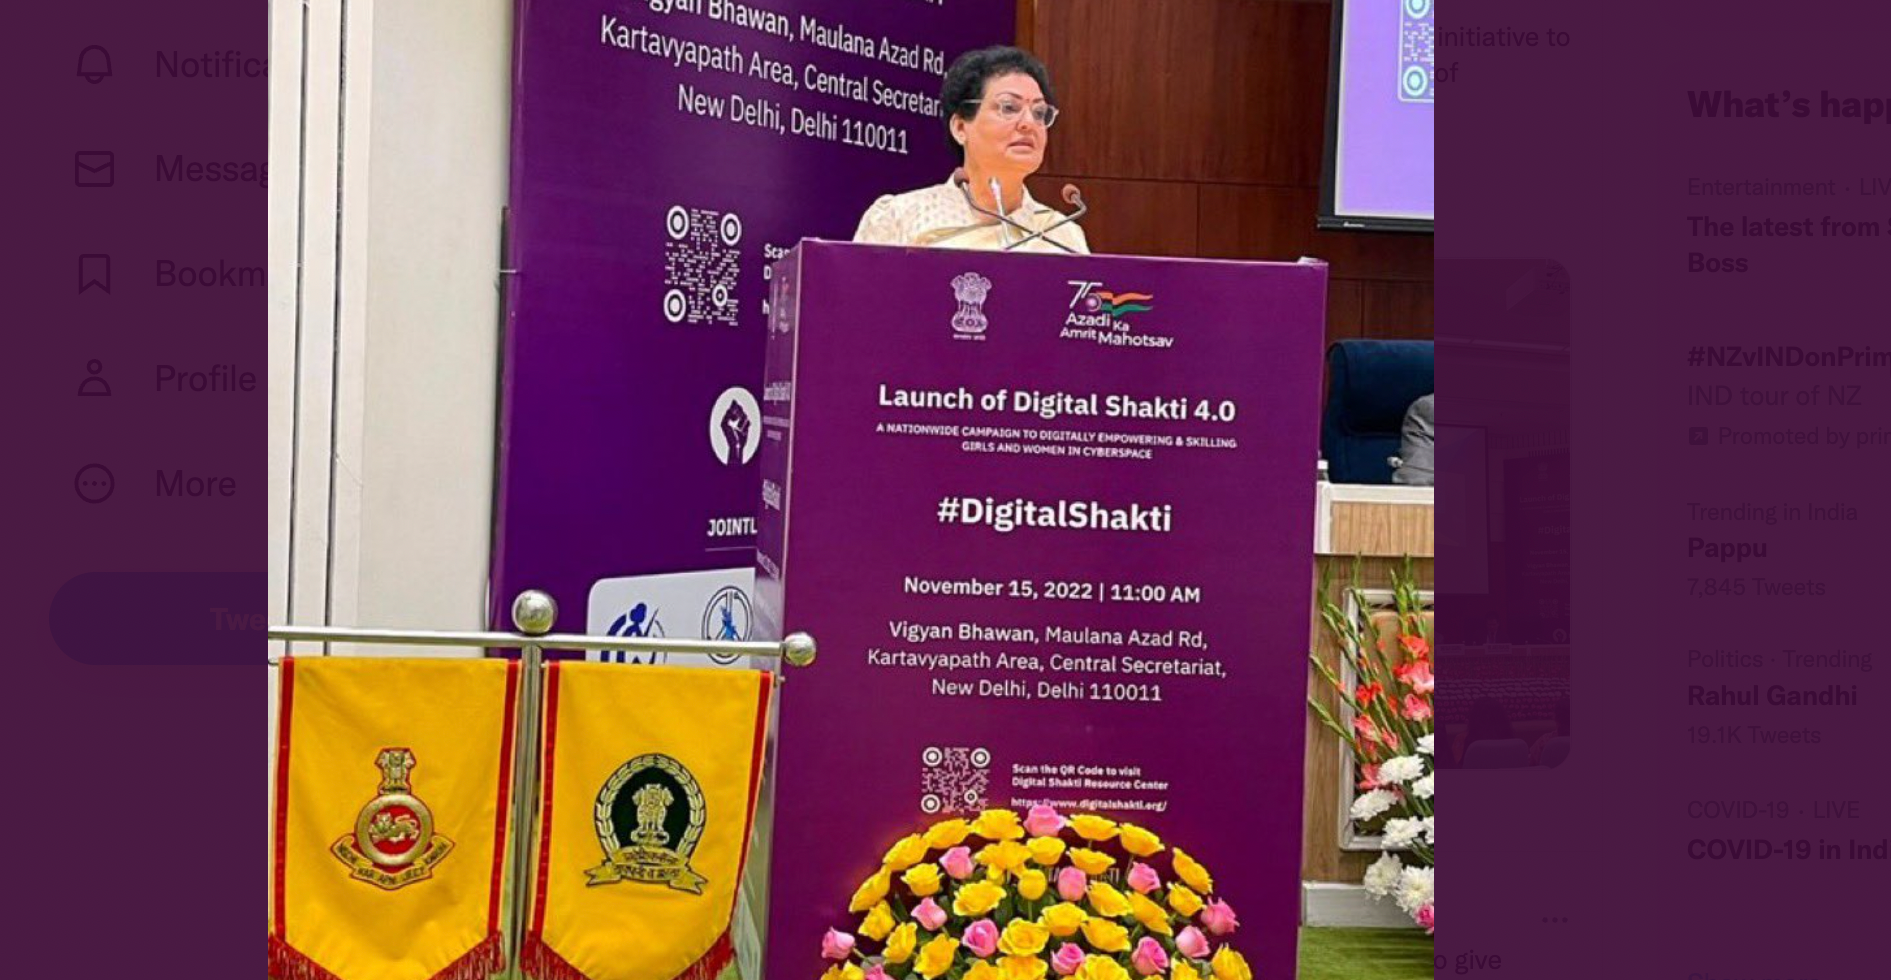 NCW launches Digital Shakti 4.0 for digital skilling of women 